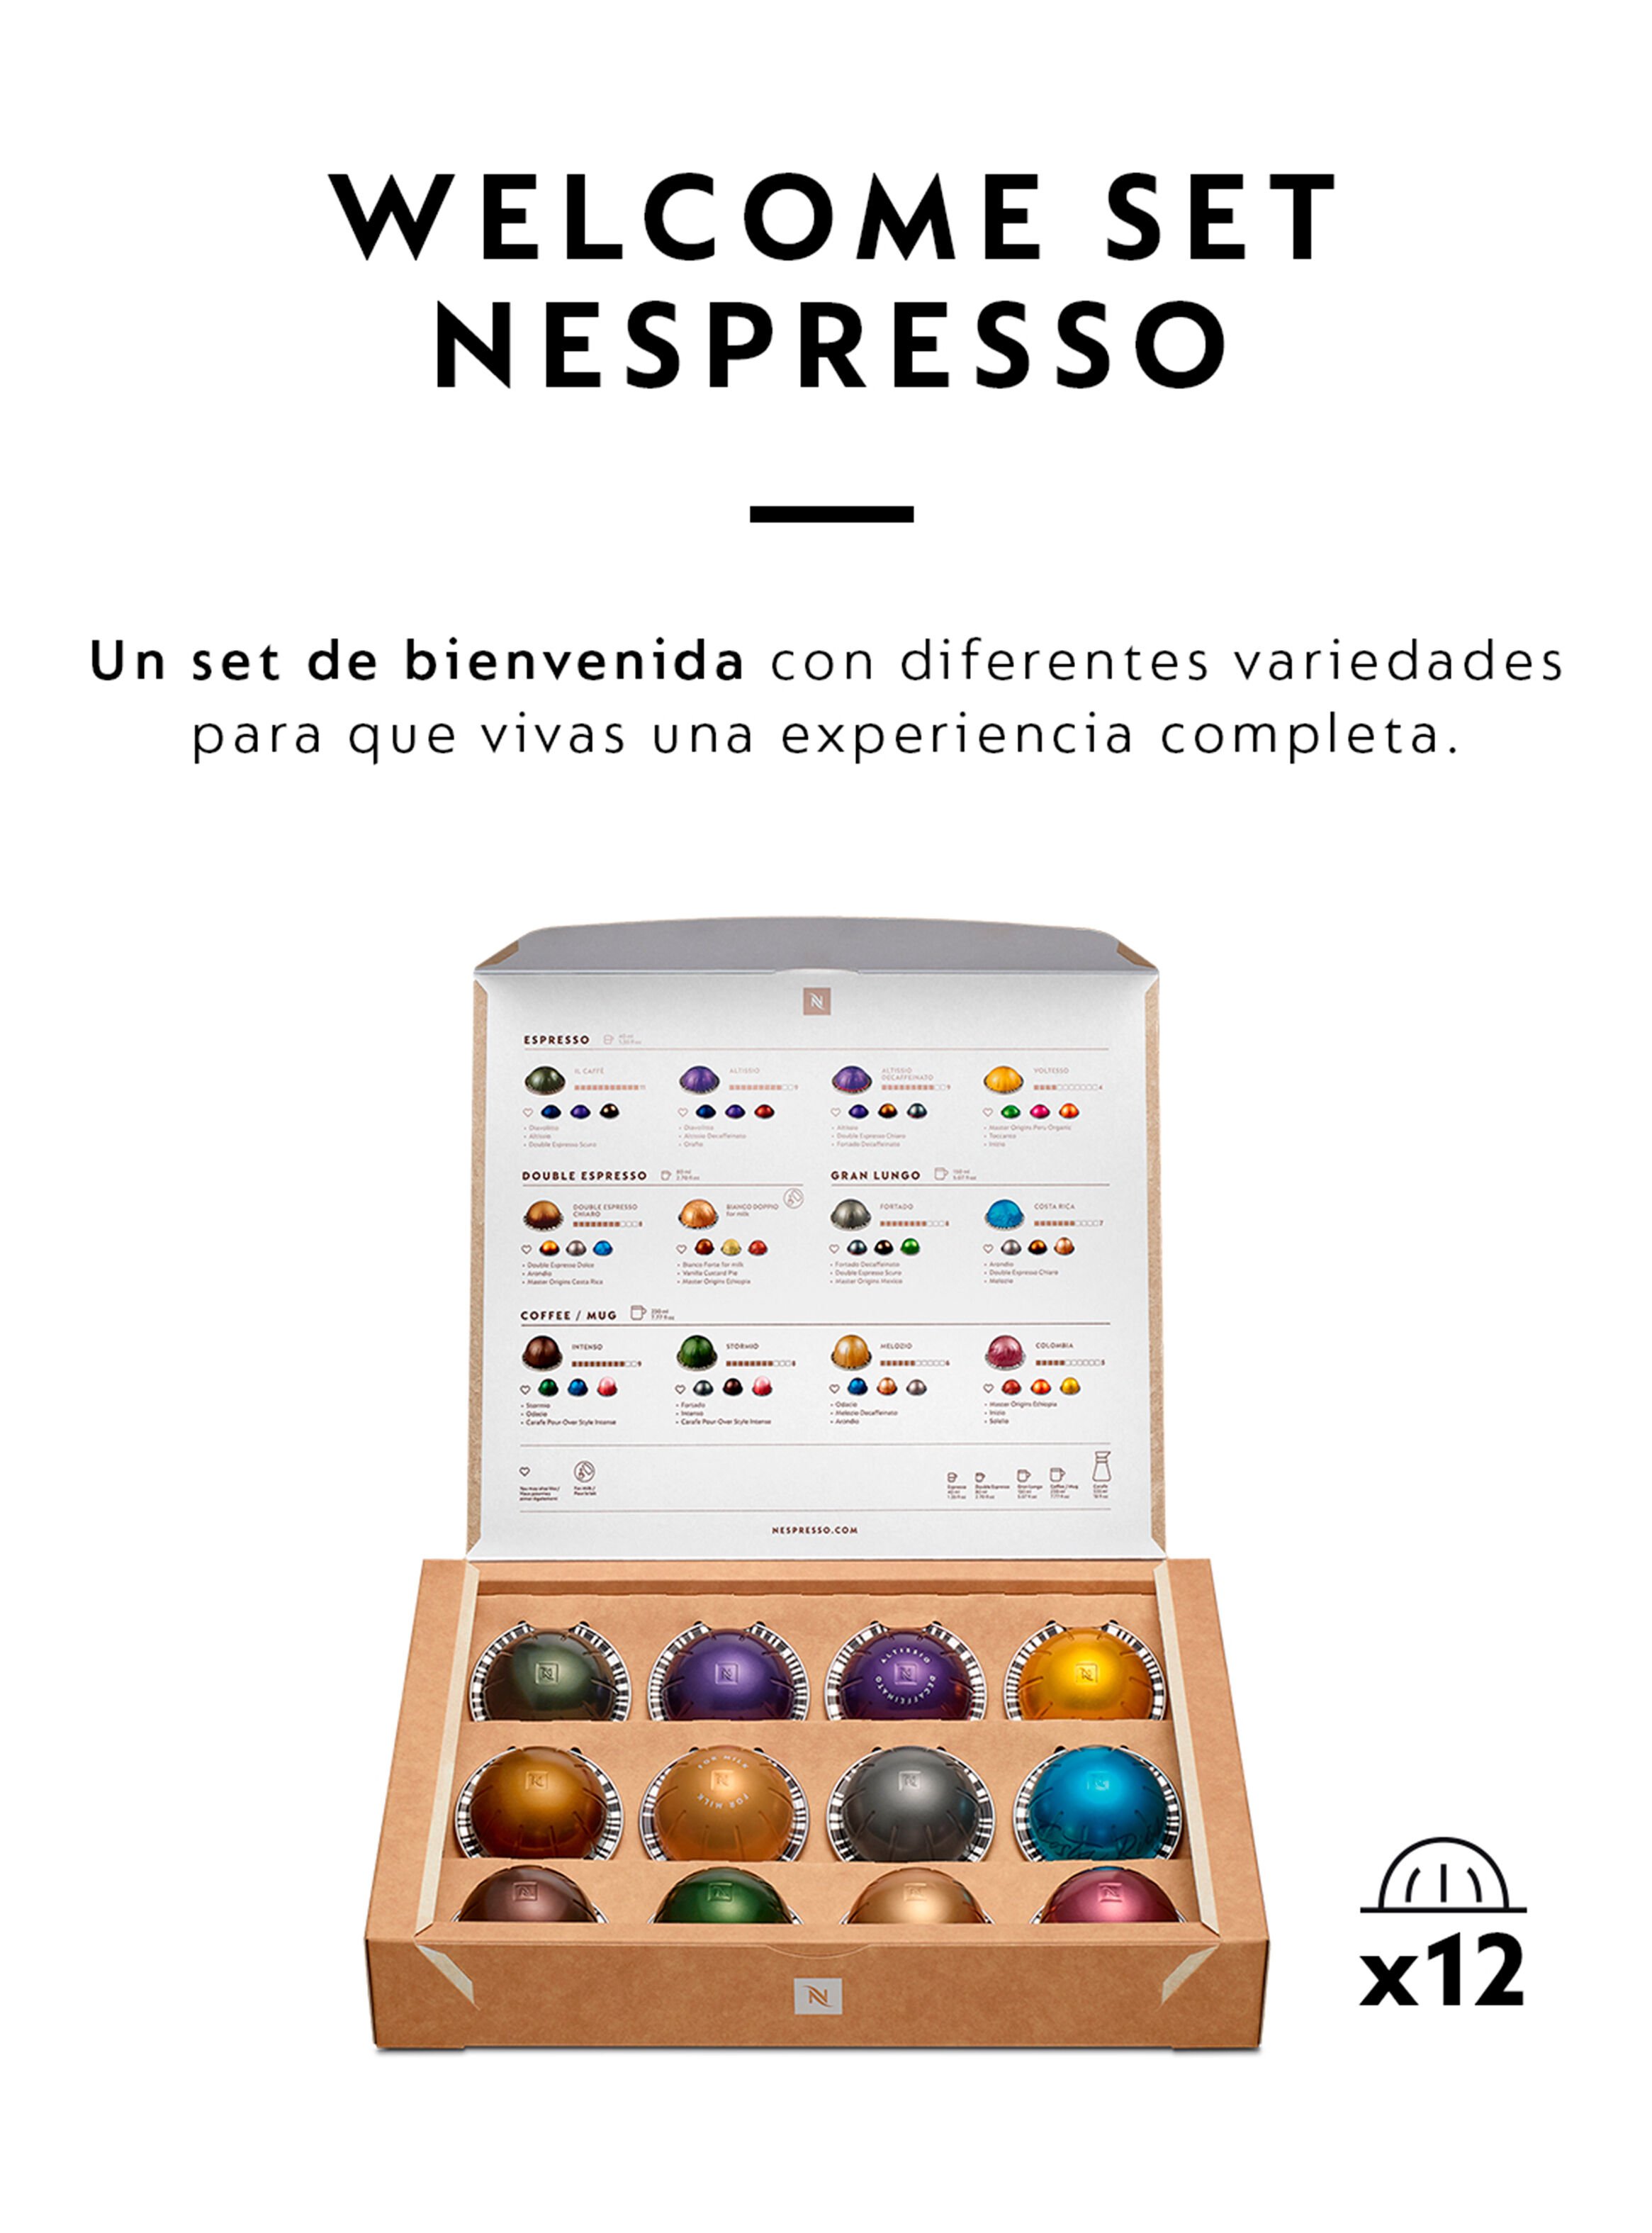 Cafetera Nespresso Vertuo Pop Roja